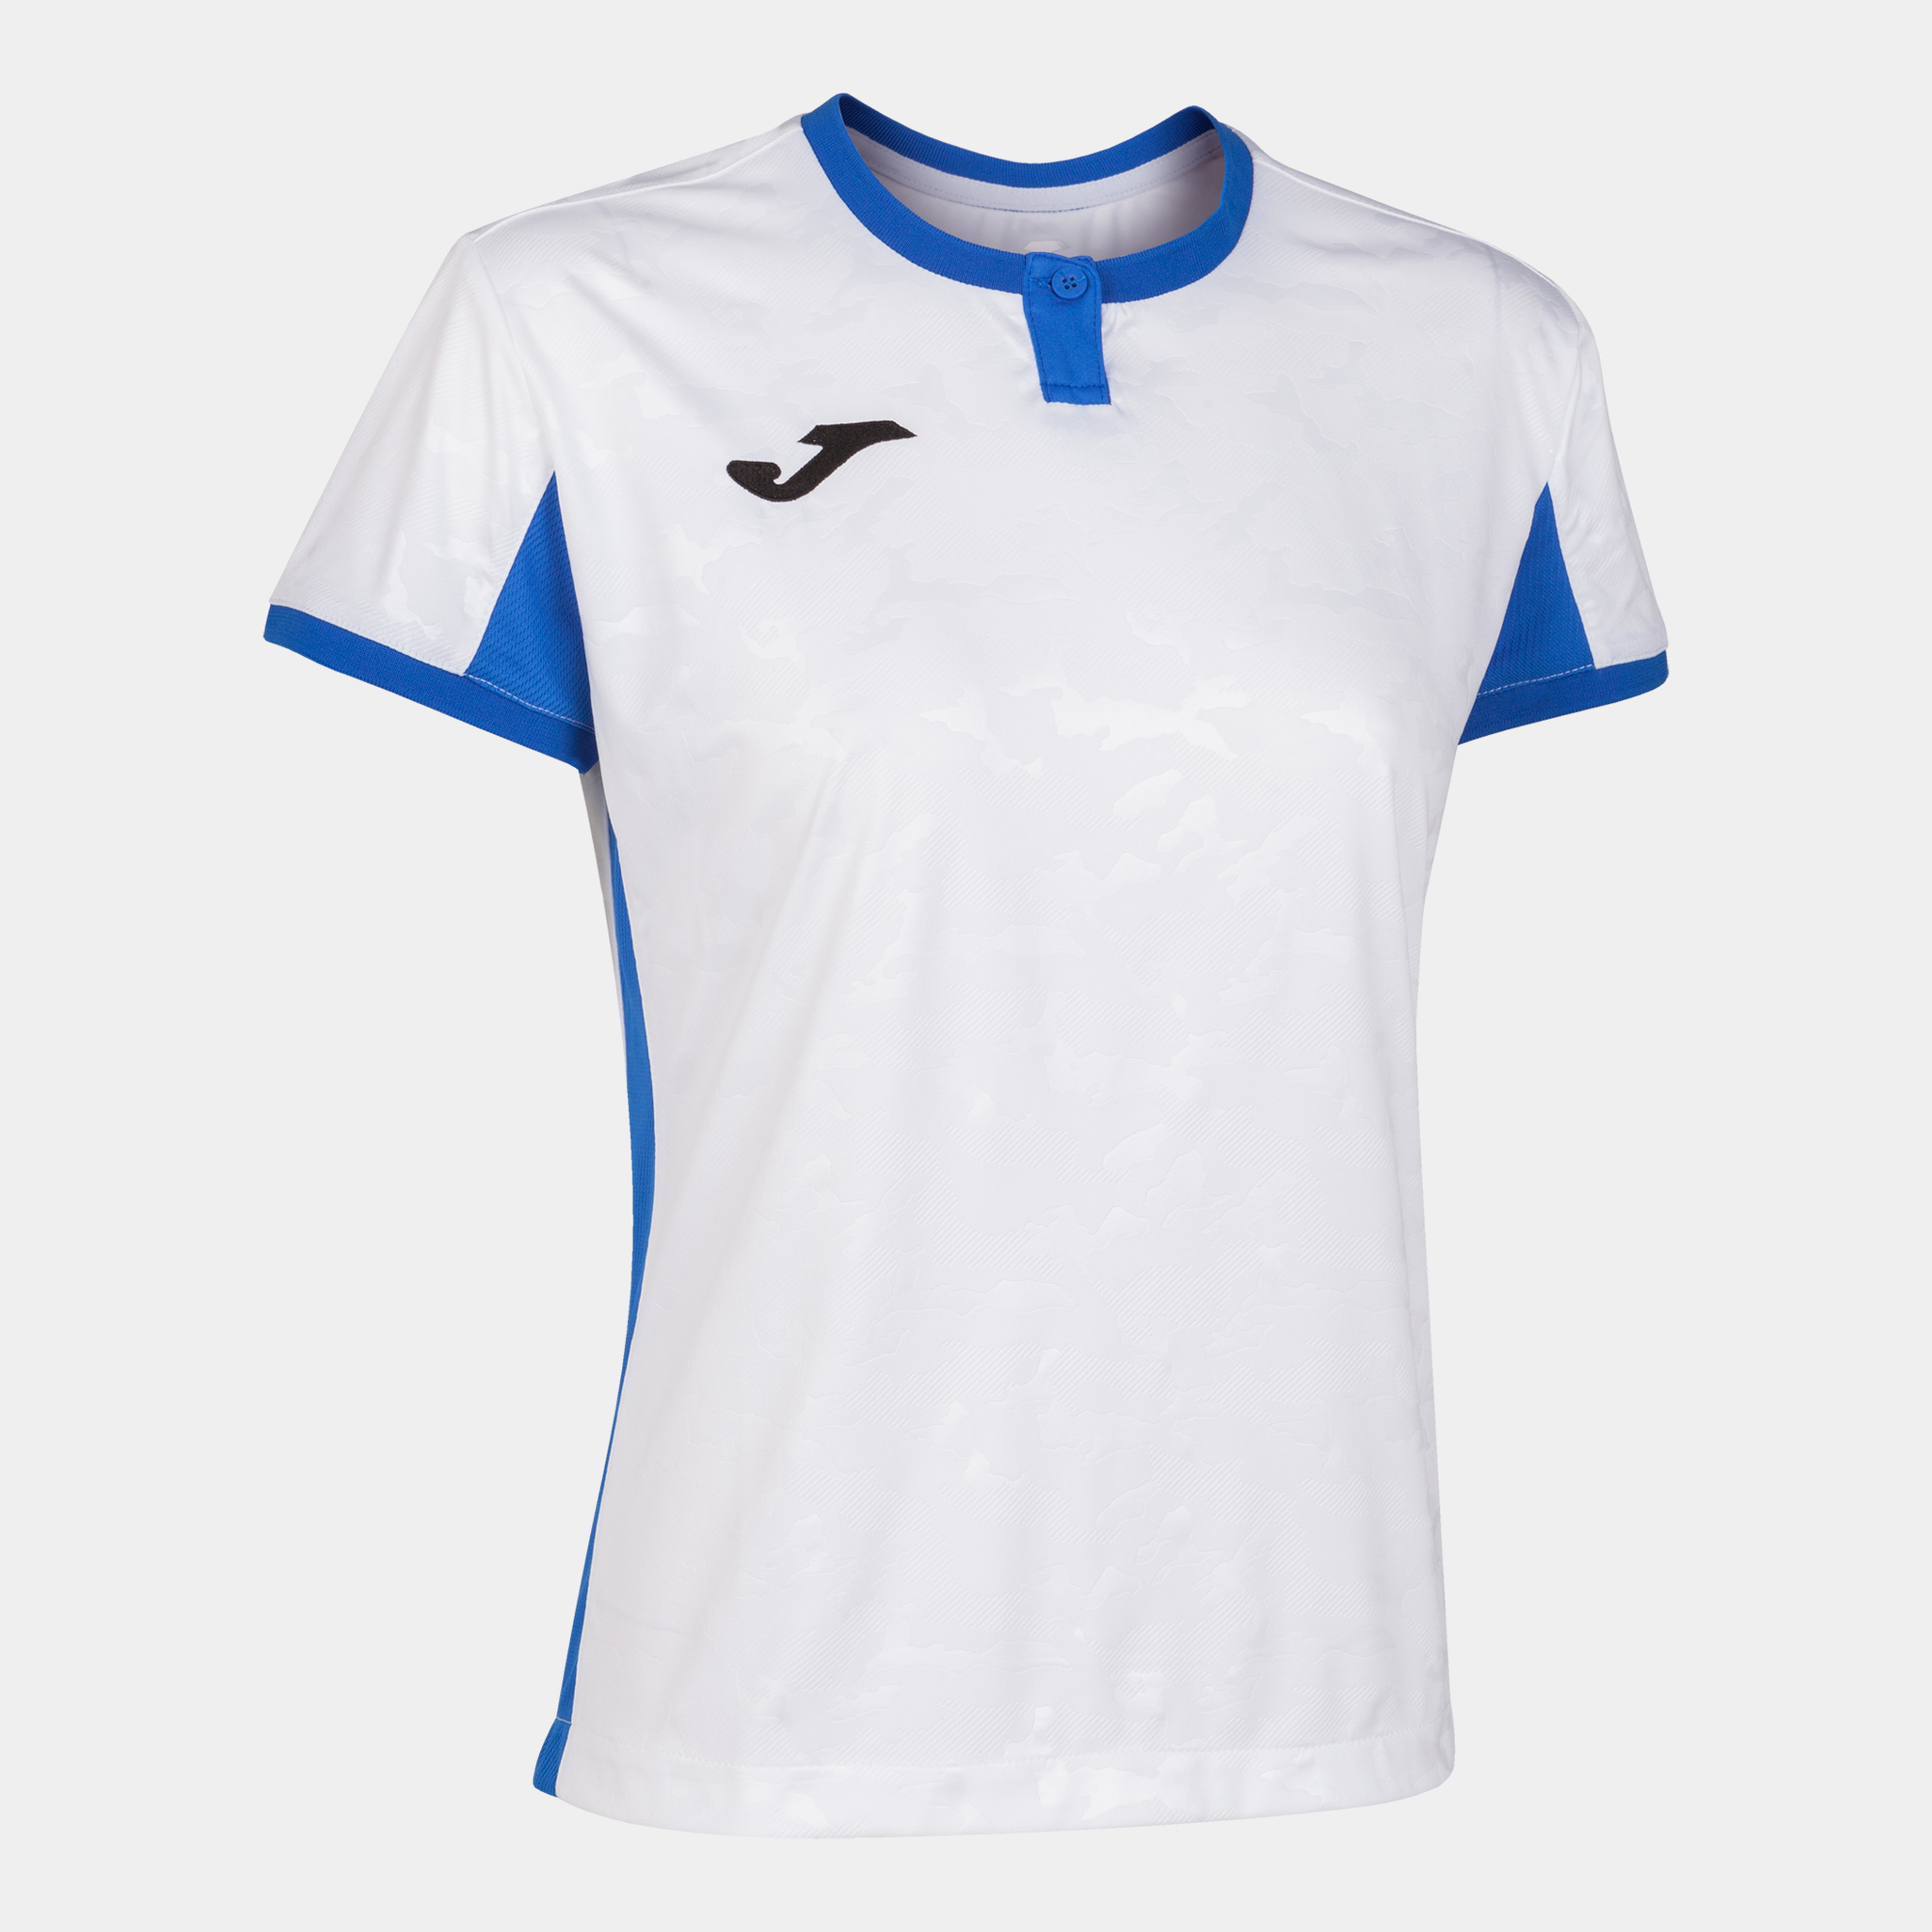 Camiseta Manga Corta Joma Toletum Ii Blanco Royal - blanco-azul - 